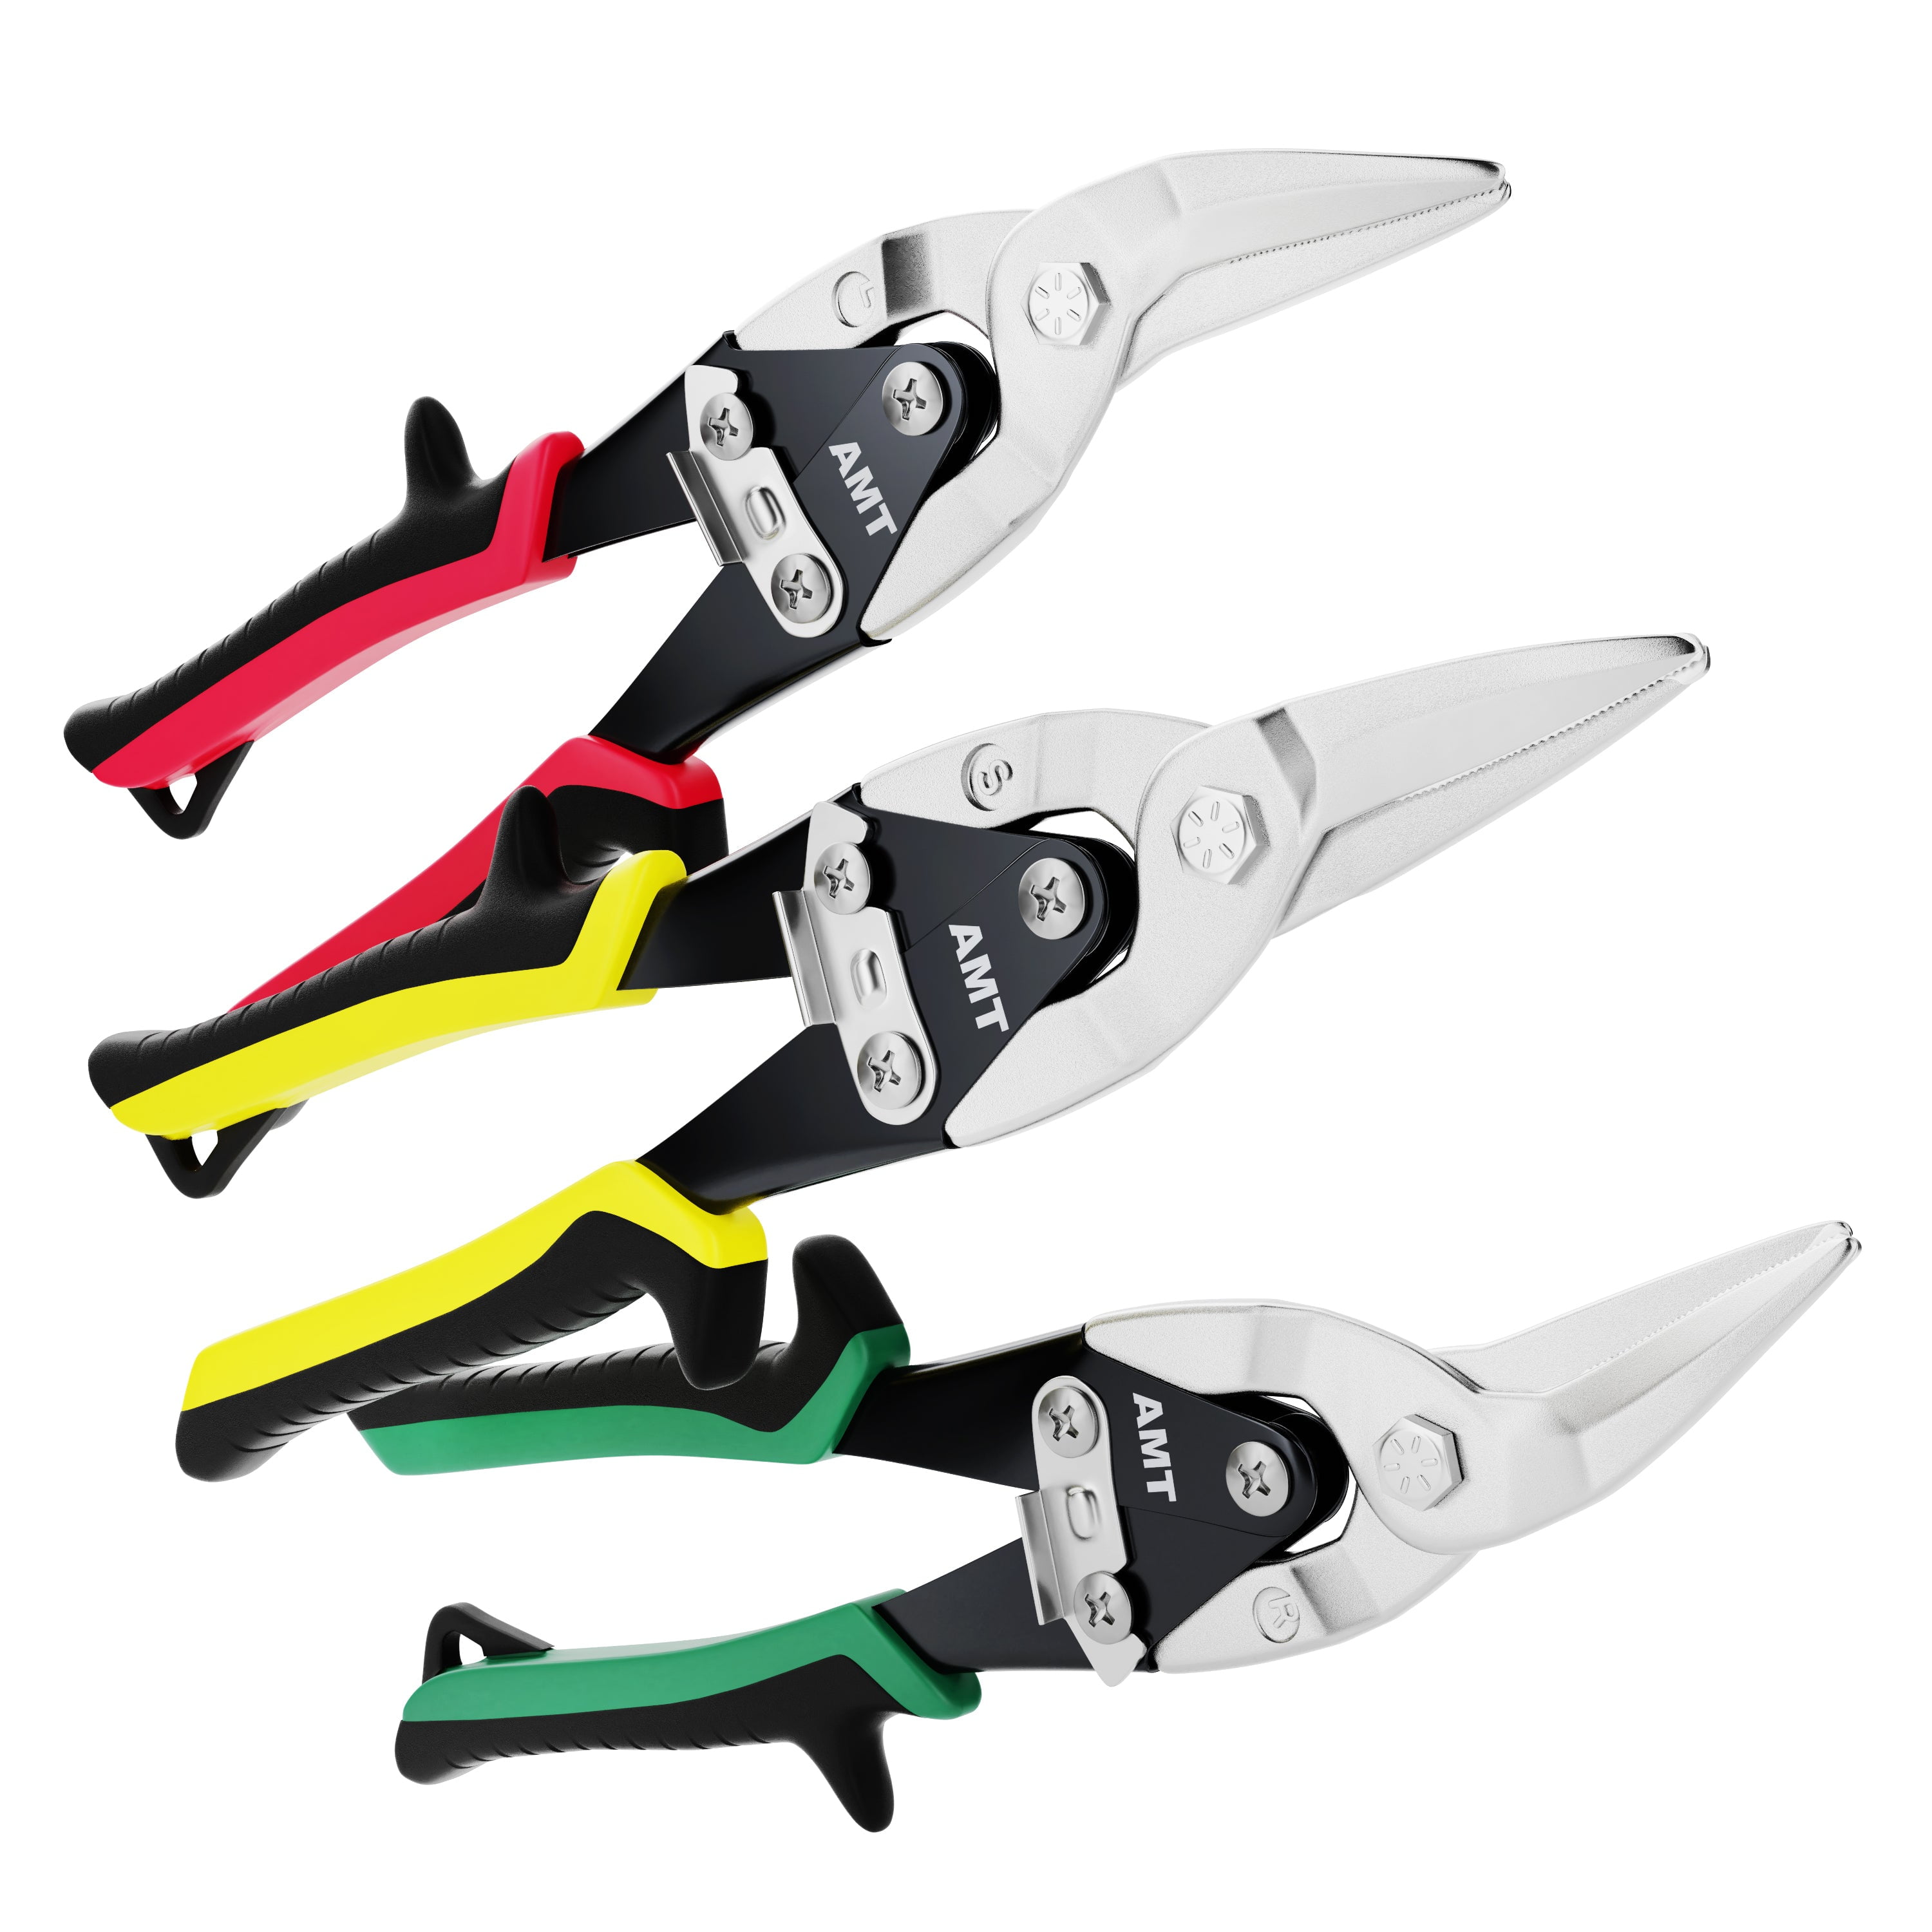 COMOWARE 3 Pack Aviation Tin Snips, 10 Inch Tin Snips for Cutting Sheet  Metal, Cr-V